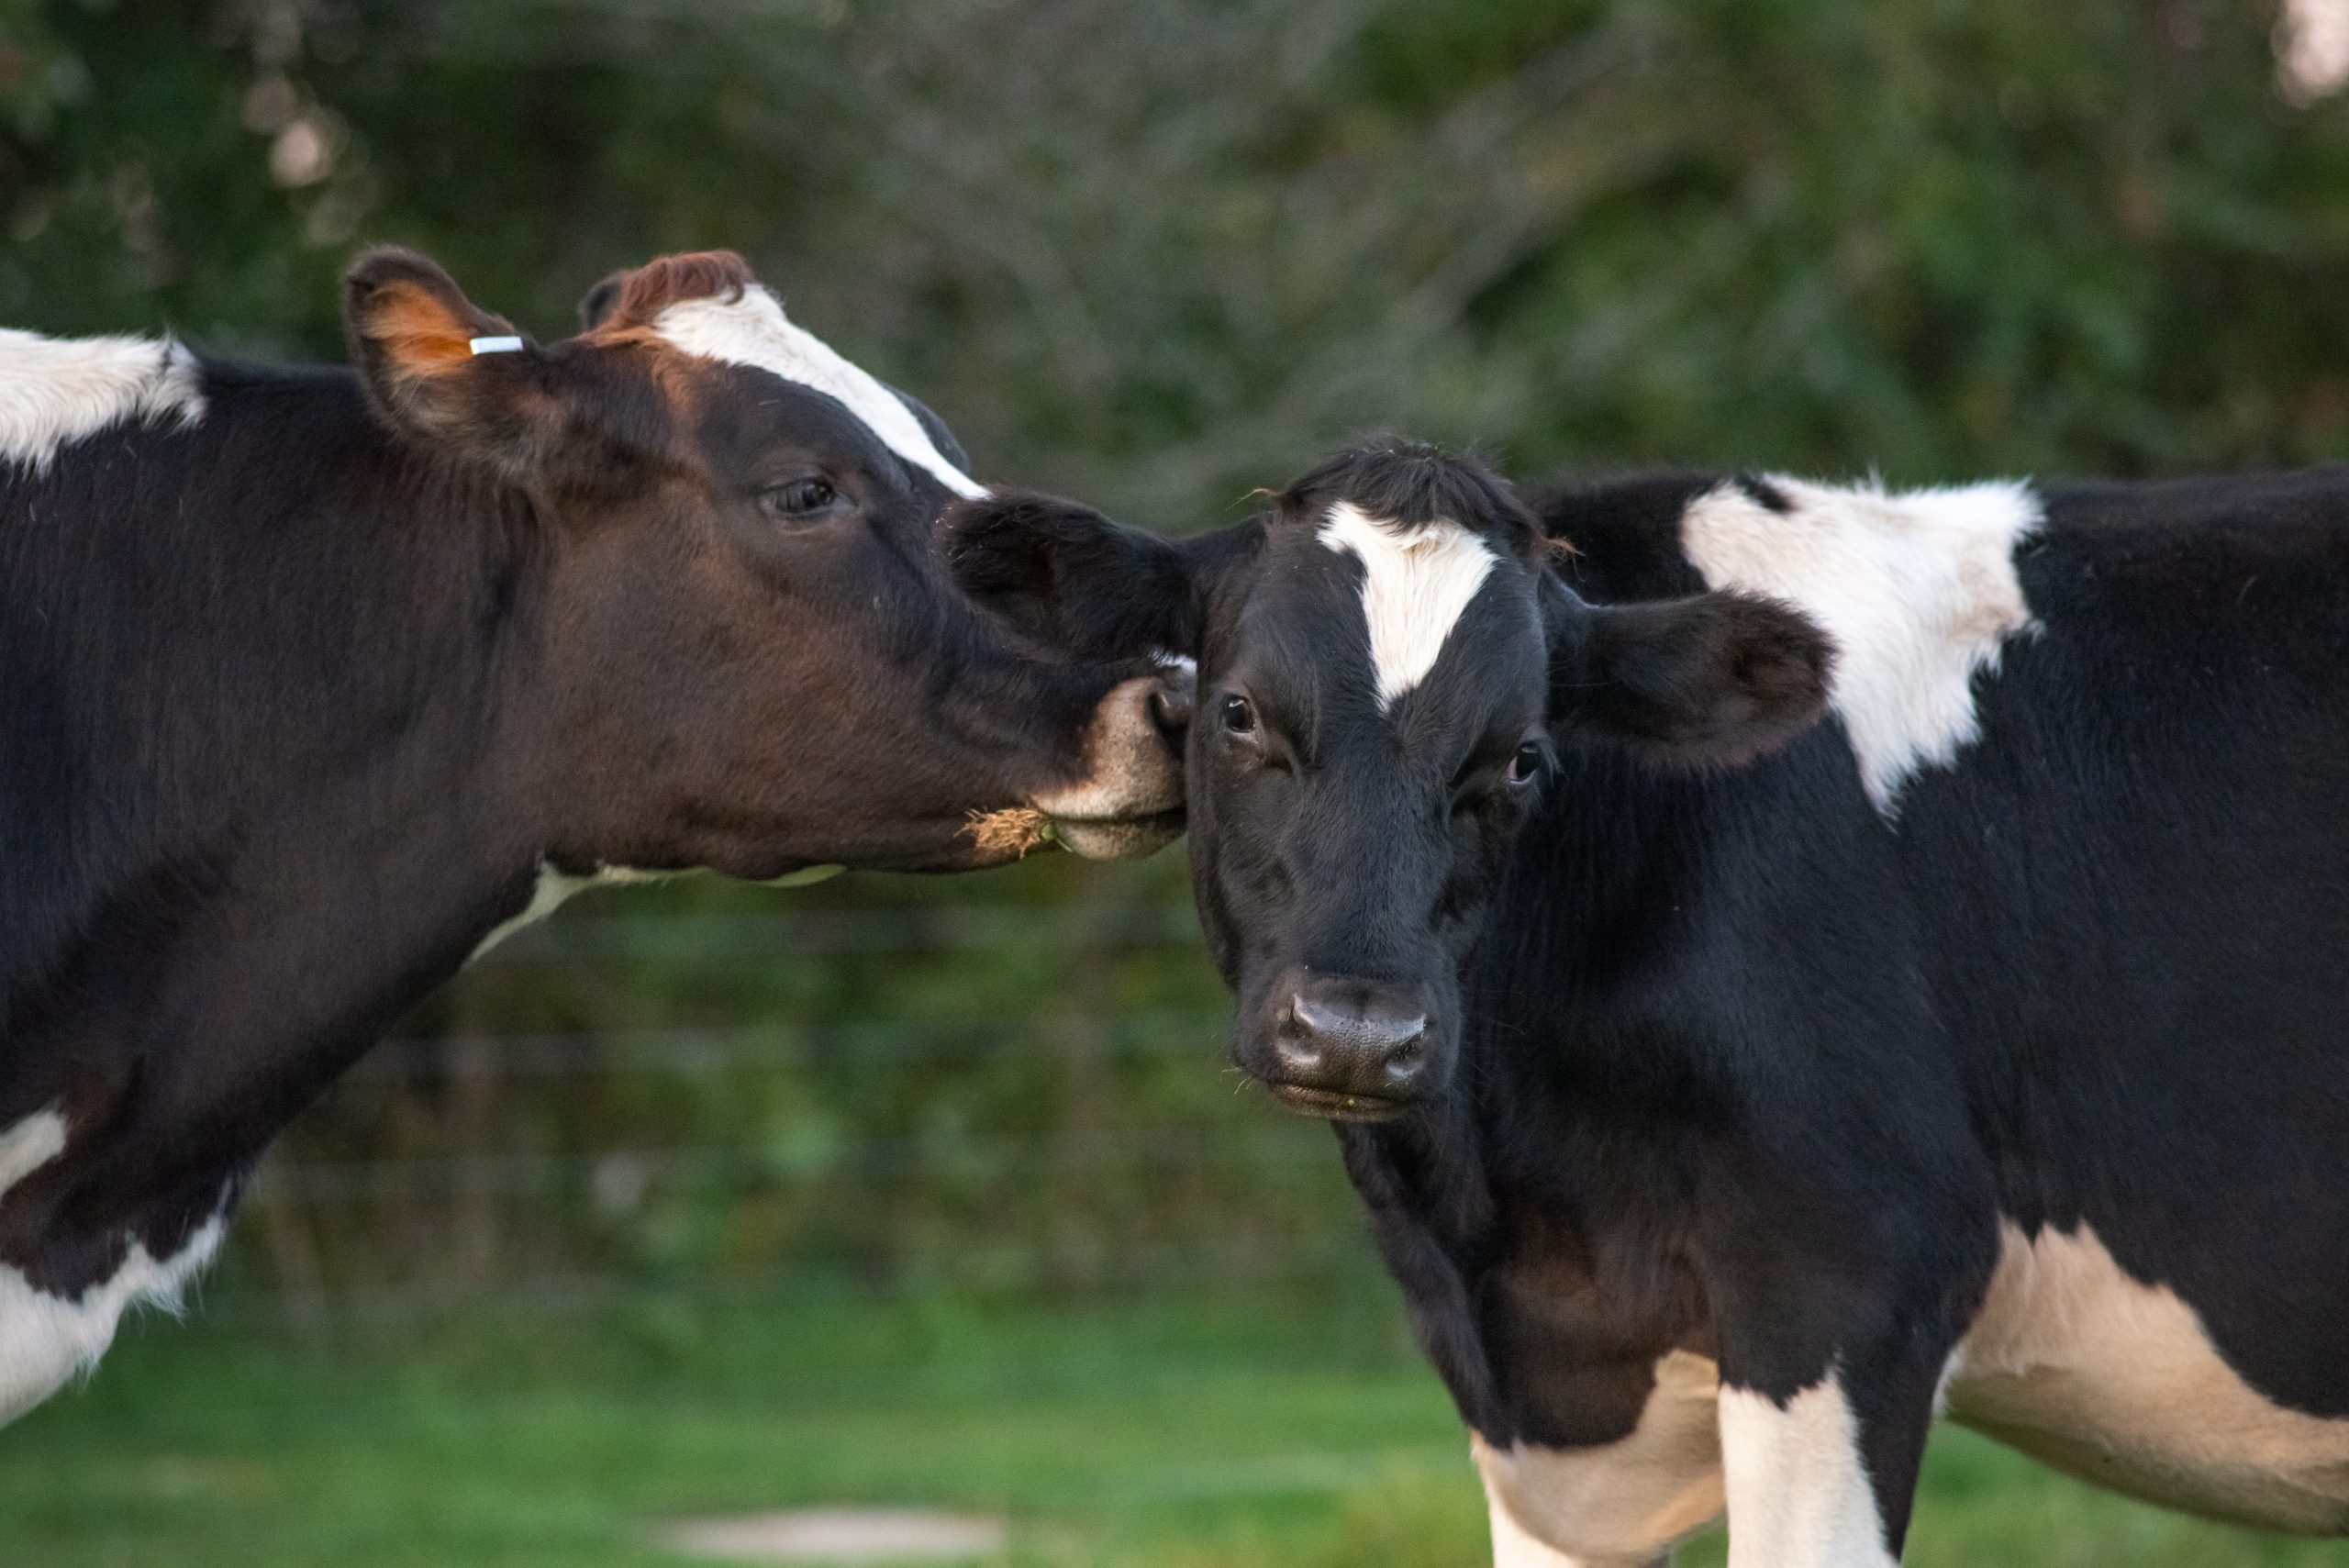 Vertical explainer photo 2 - Snickerdoodle and Michael Morgan calves at Farm Sanctuary.